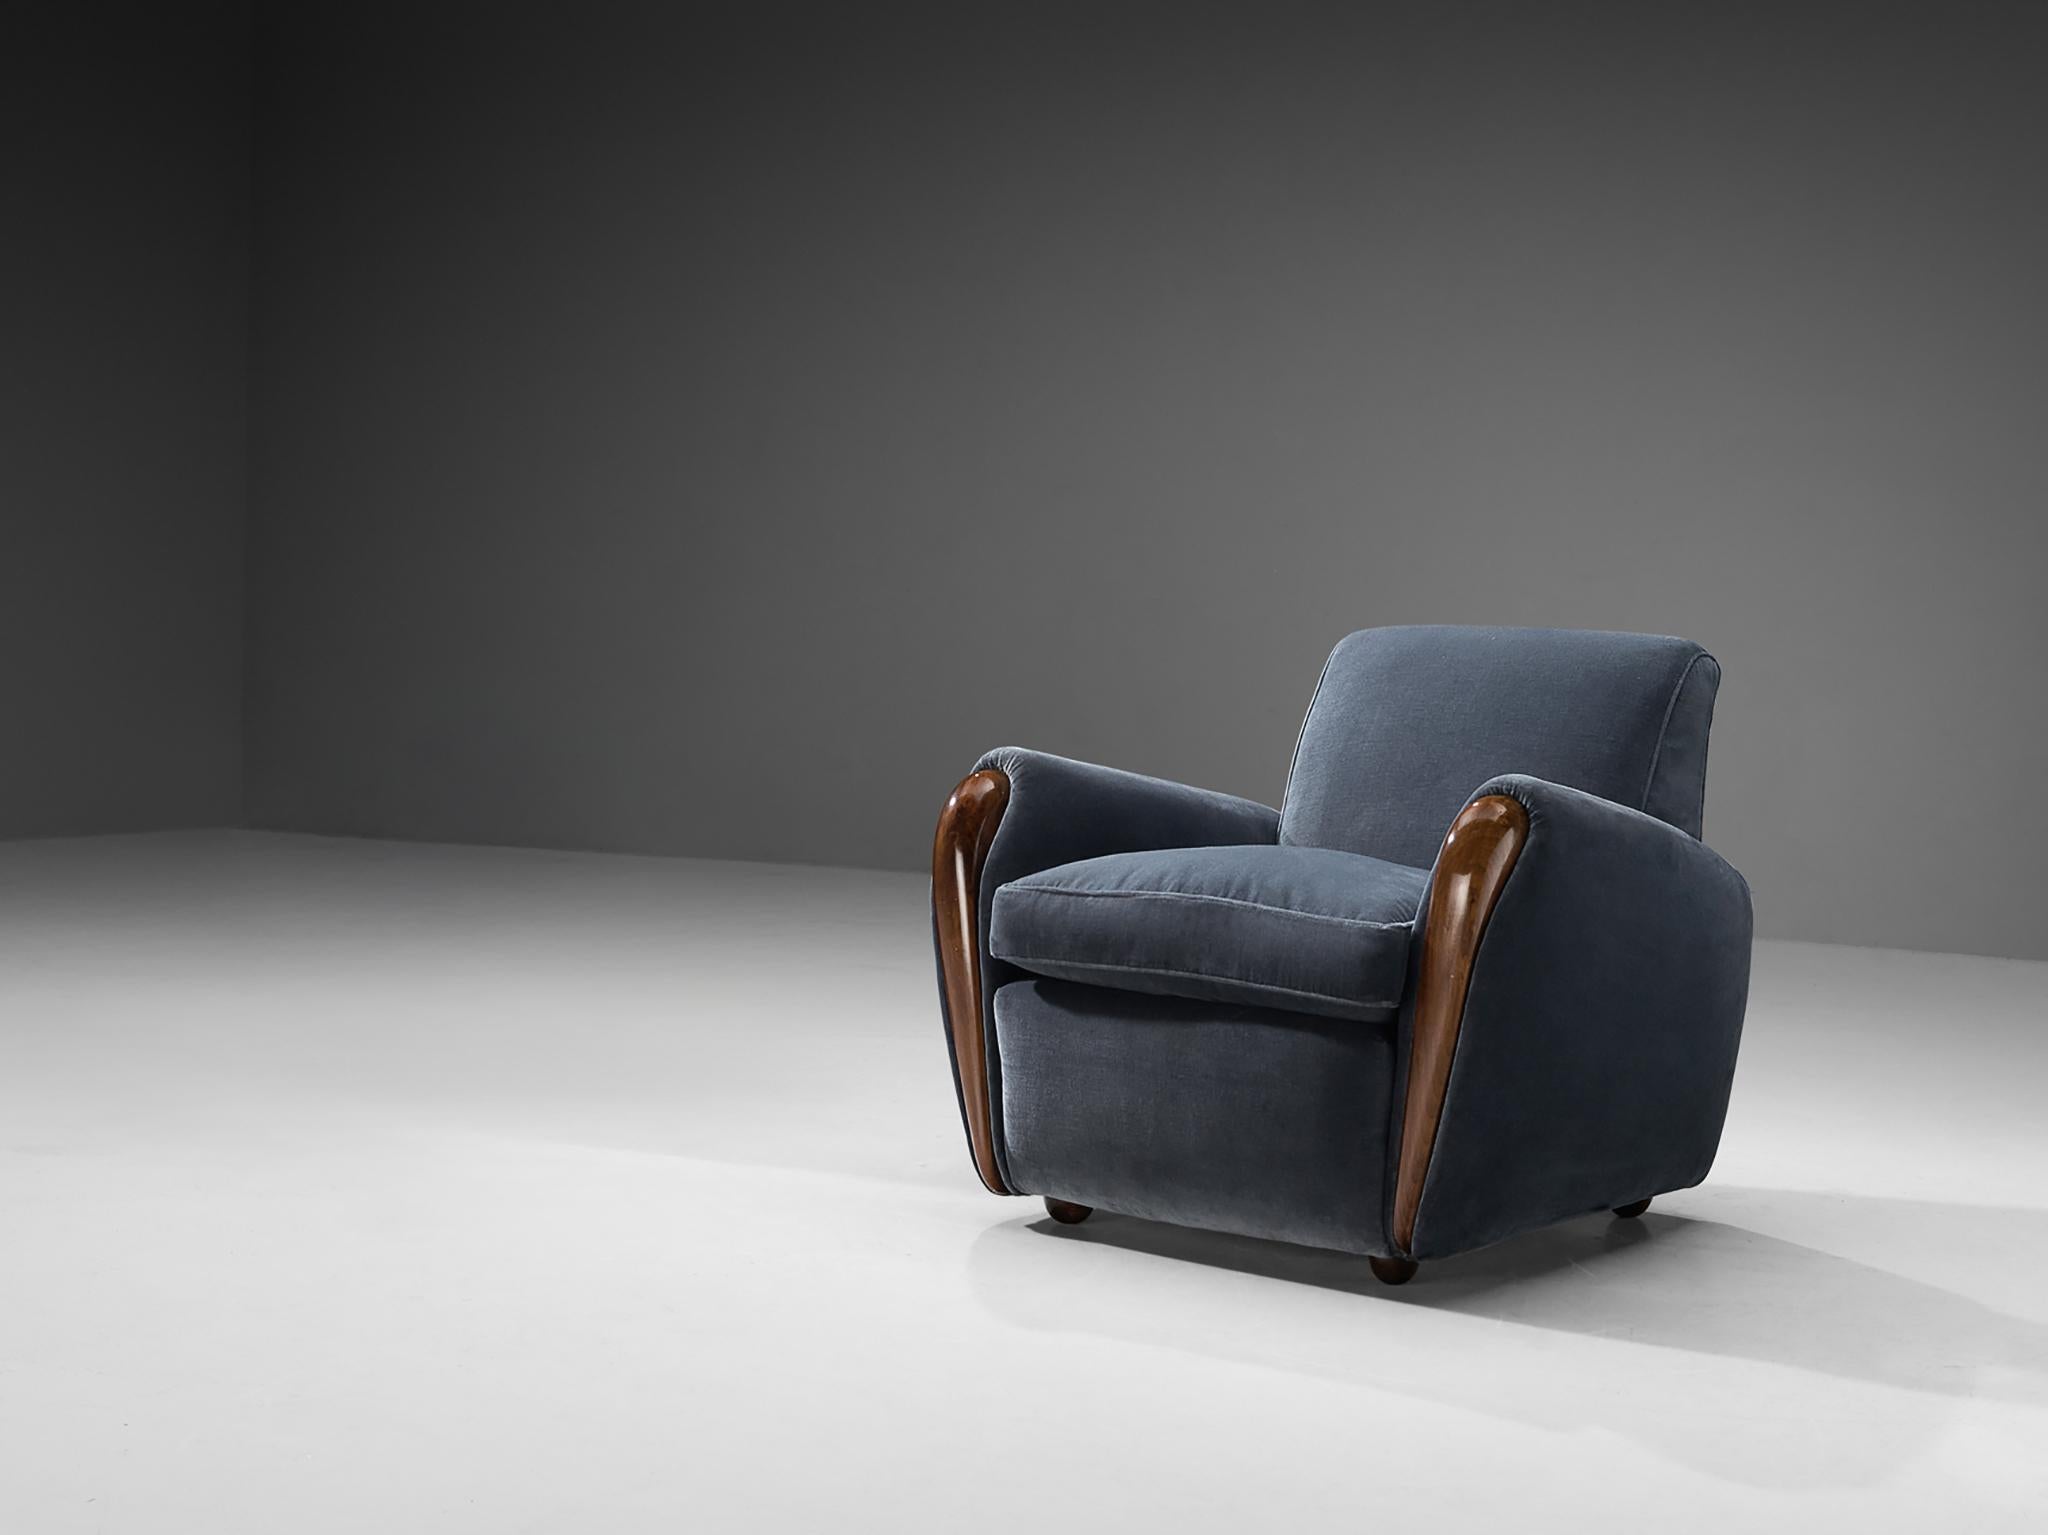 Osvaldo Borsani for Arredamenti Borsani Varedo, lounge chair model 3615, walnut, velvet fabric, Italy, 1941 

A design by Osvaldo Borsani, this easy chair epitomizes a harmonious fusion of subtle contours and graceful curves, showcasing Borsani's